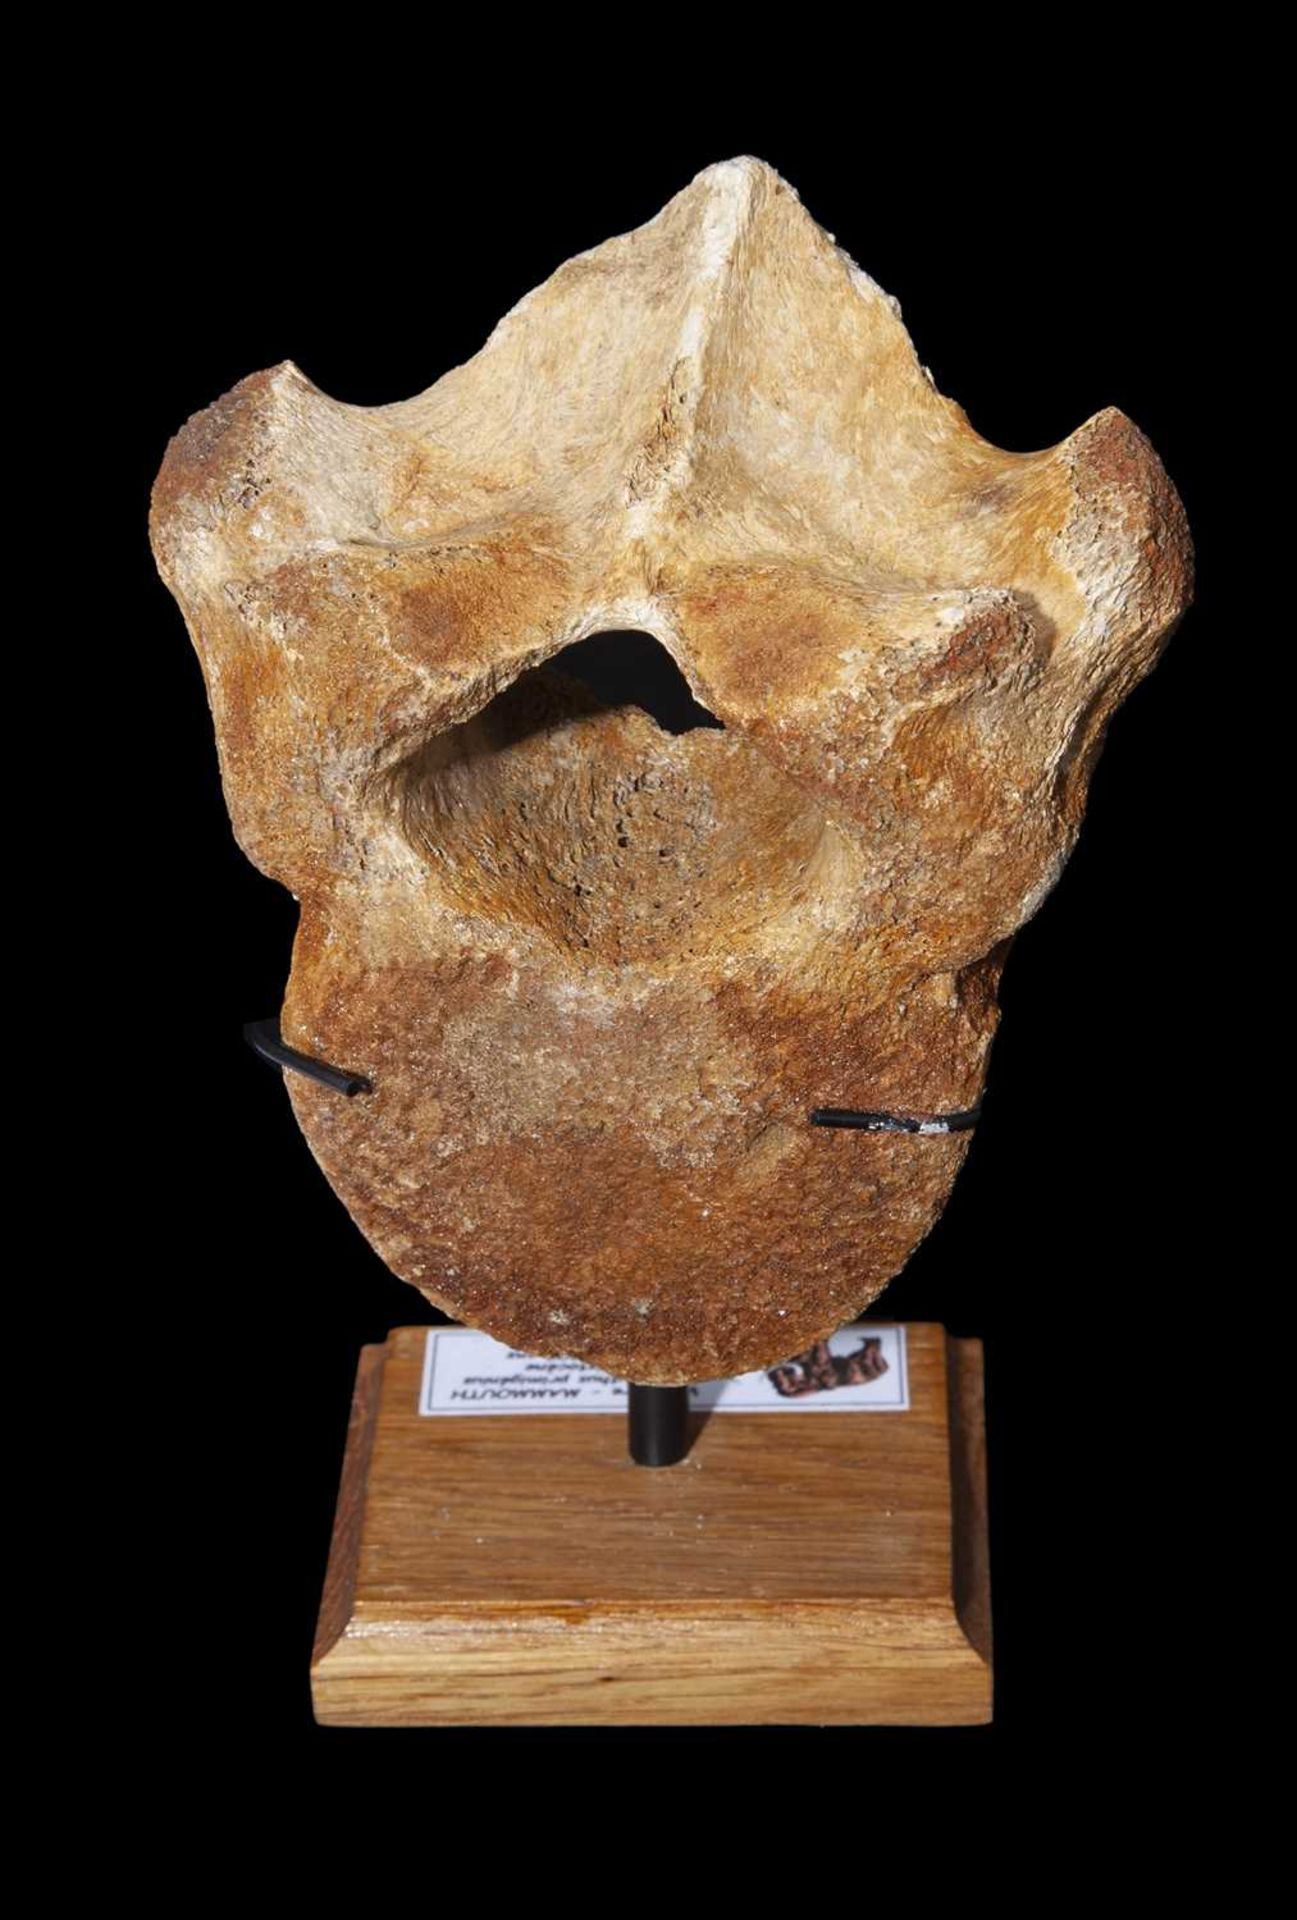 A FOSSILISED EXTINCT WOOLLY MAMMOTH VERTEBRE BONE, 100,000 YEARS OLD - Image 2 of 2